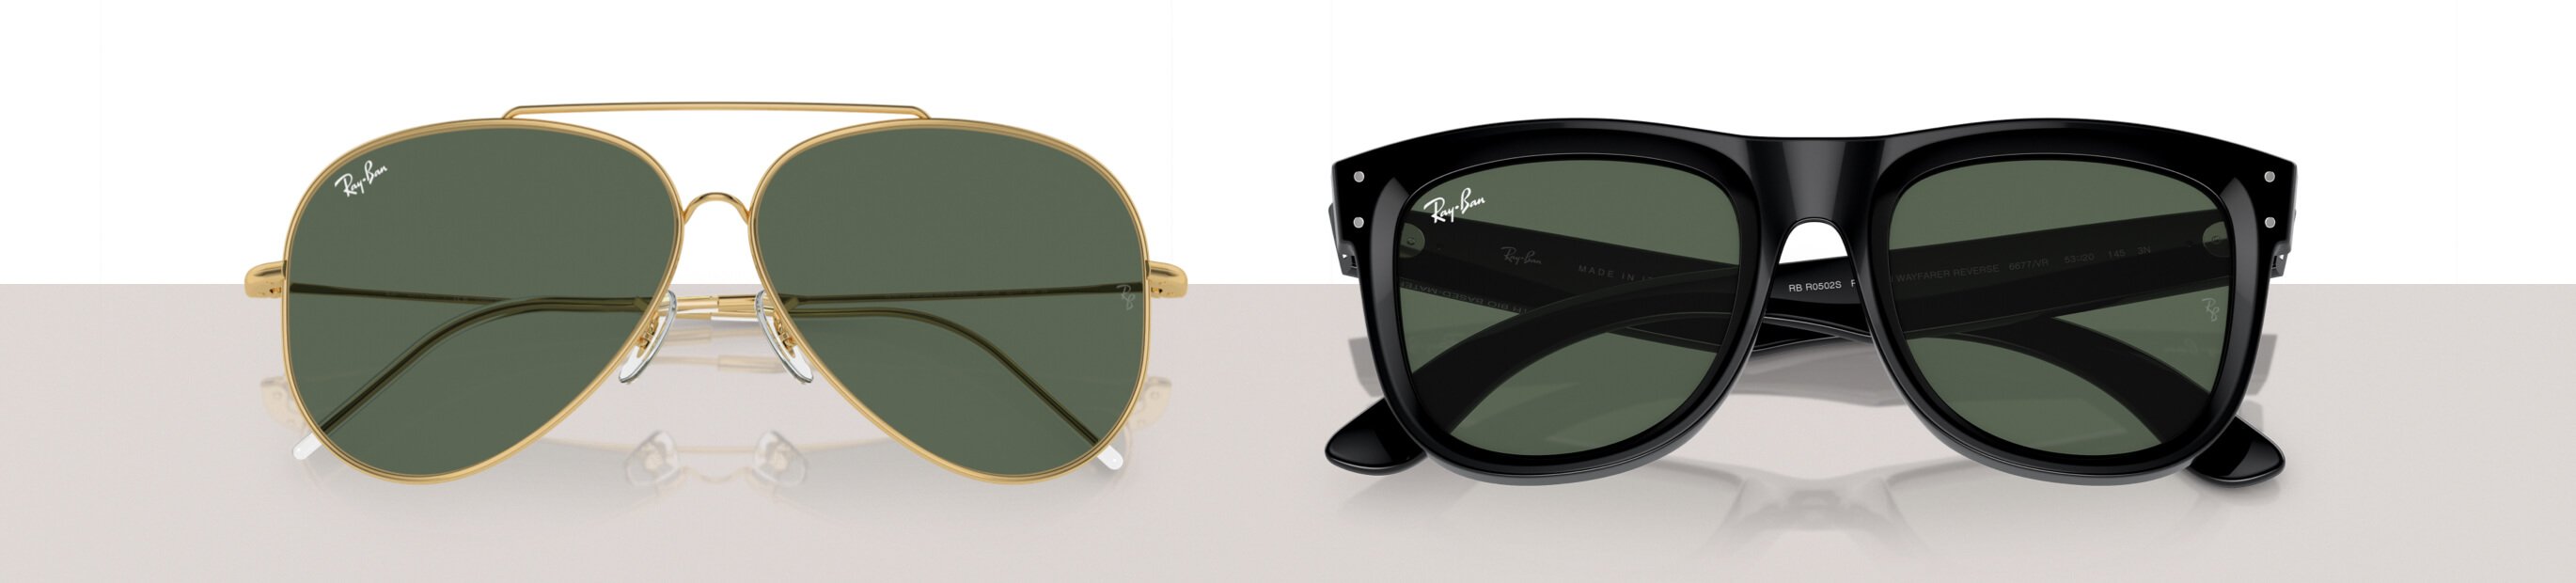 Ray-Ban Reverse | Ny form solbrilleglas | Synoptik |